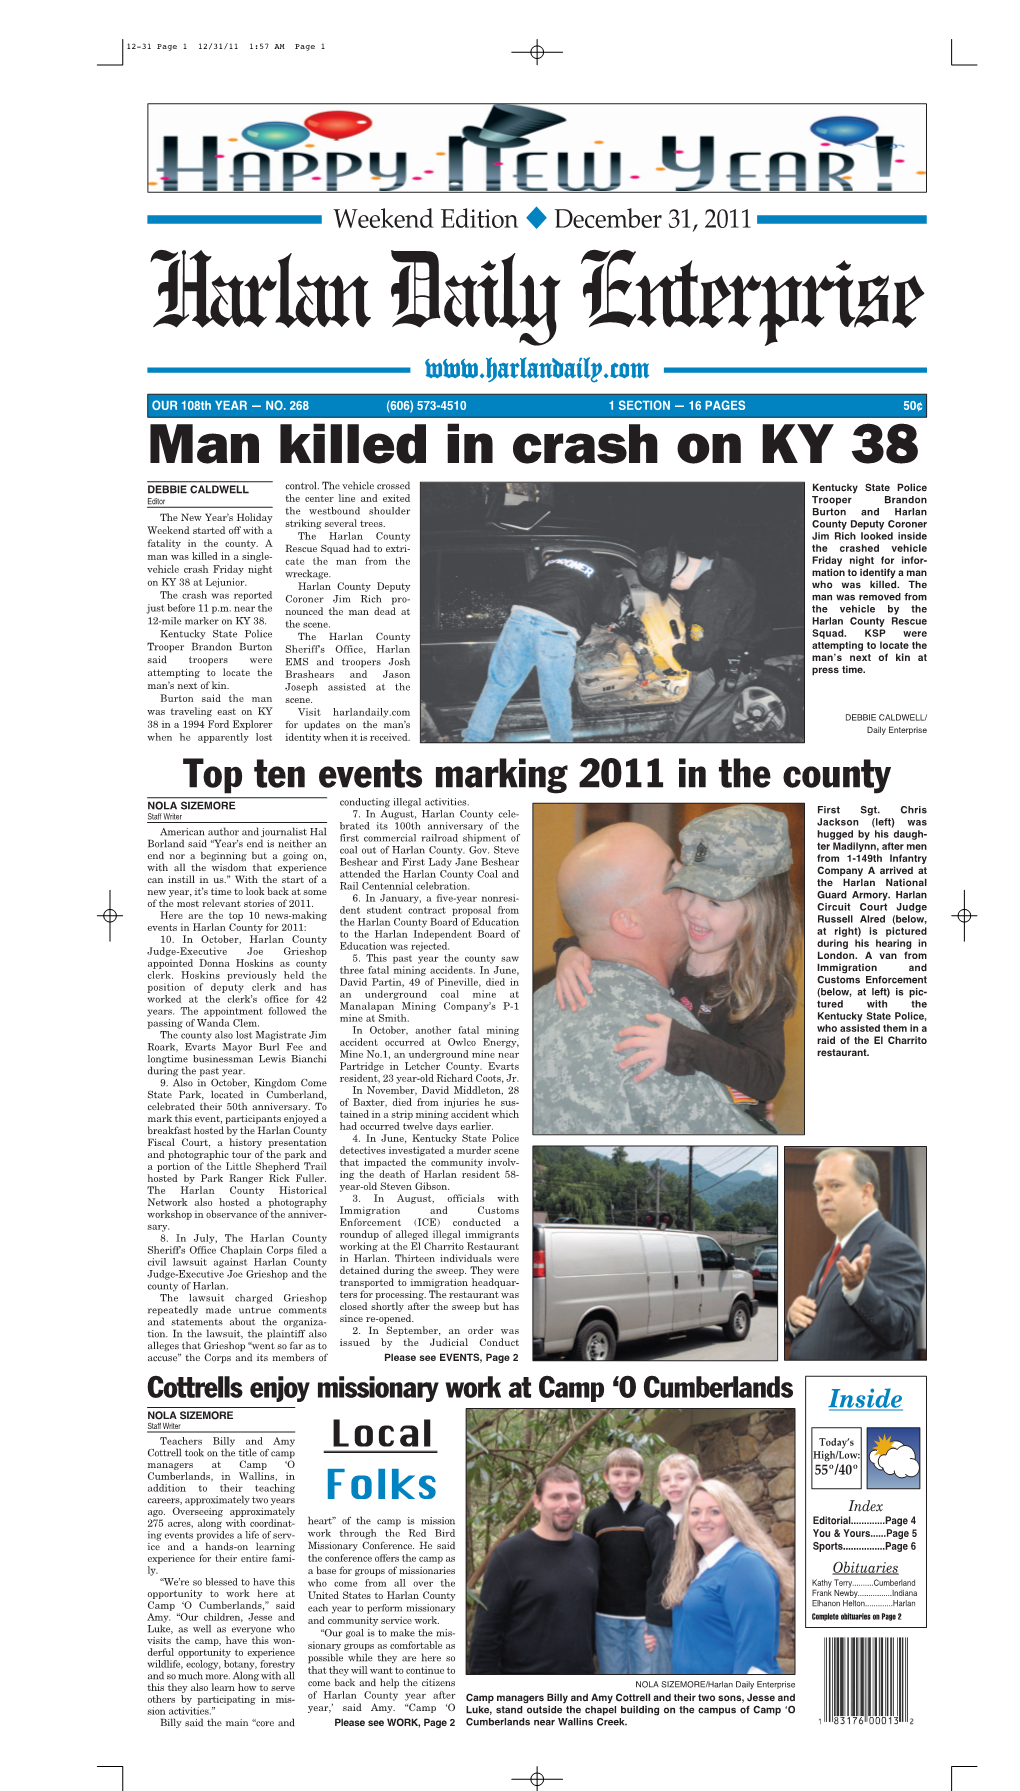 Man Killed in Crash on KY 38